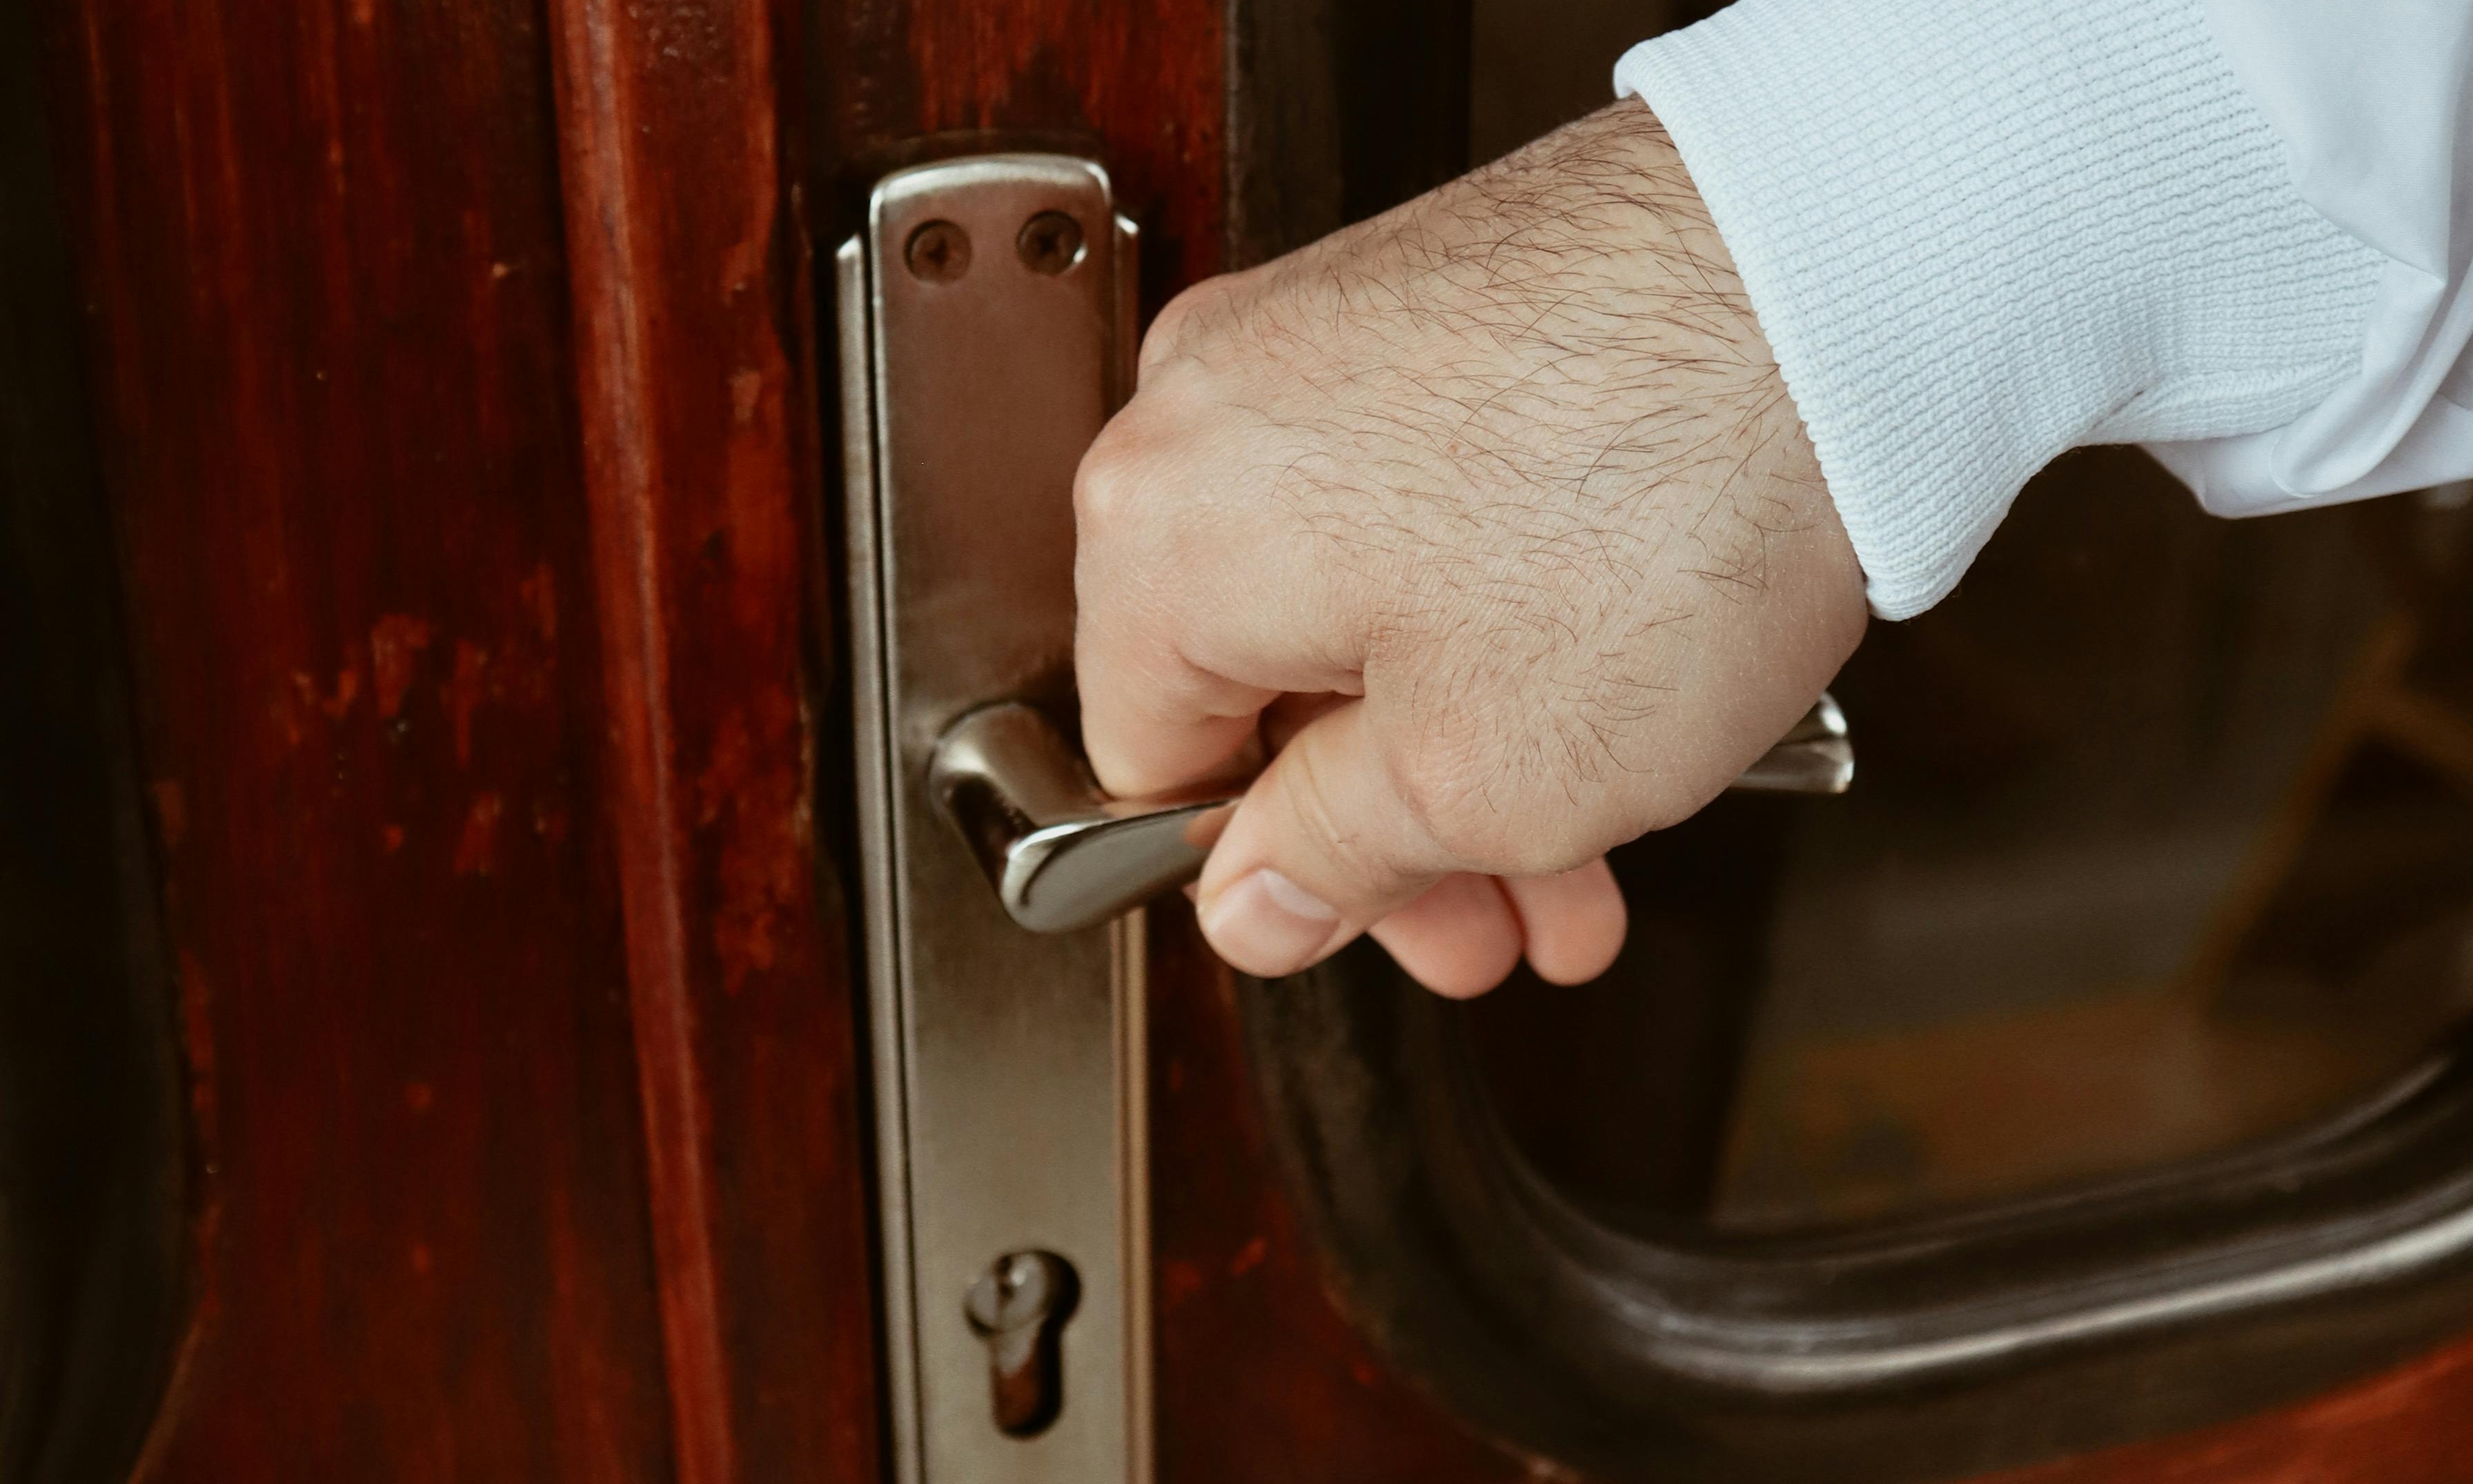 A close-up of a hand grasping a door handle | Source: Pexels